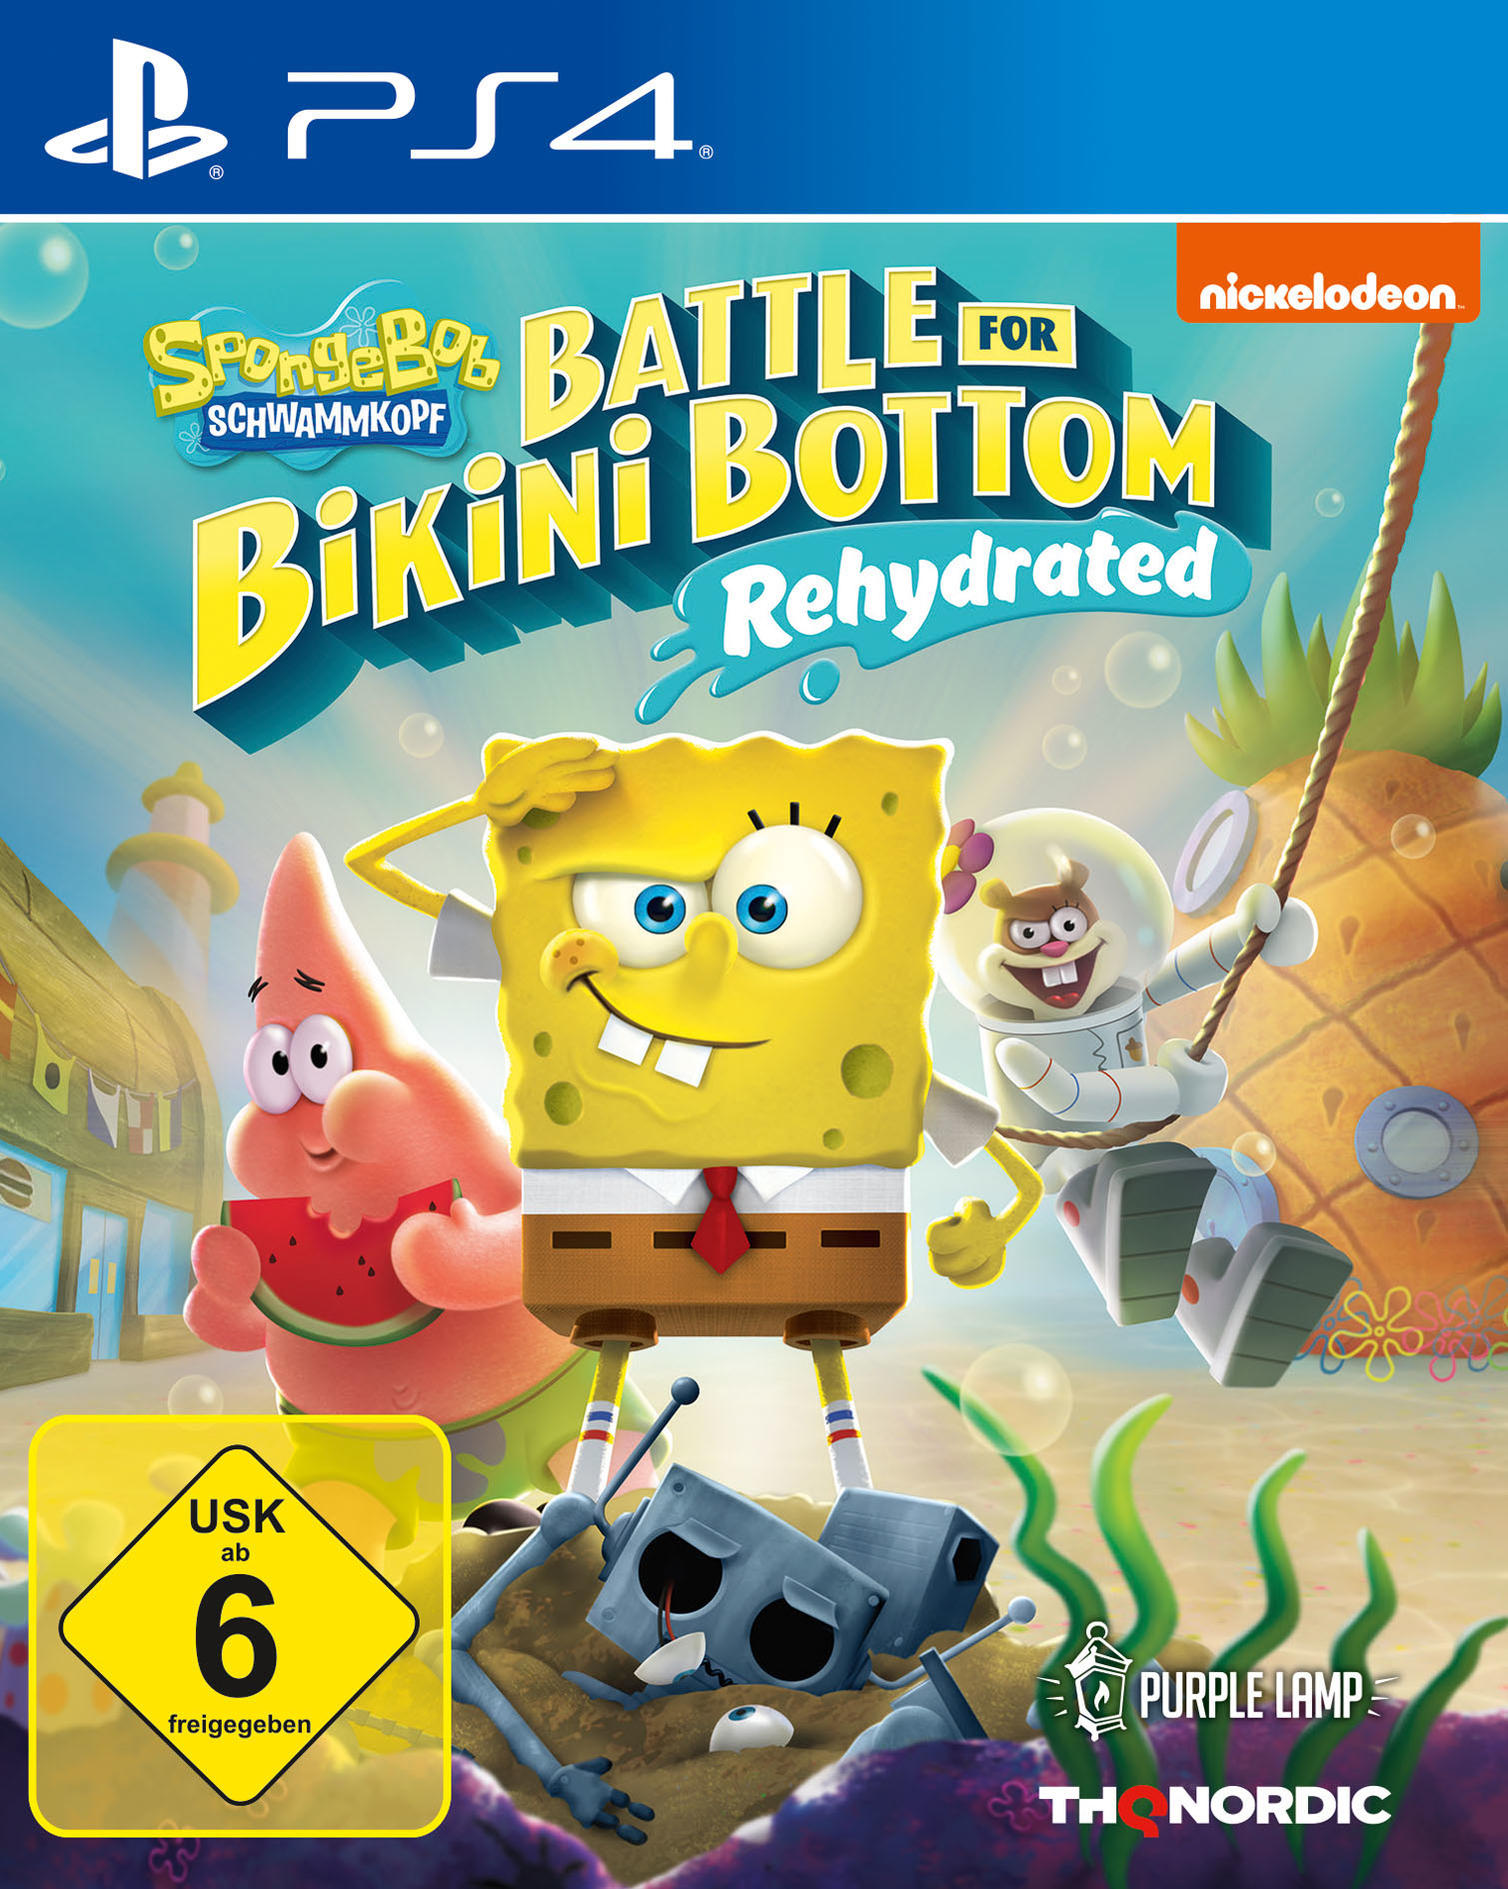 SquarePants: 4] Bikini - [PlayStation for Spongebob Bottom Rehydrated - Battle